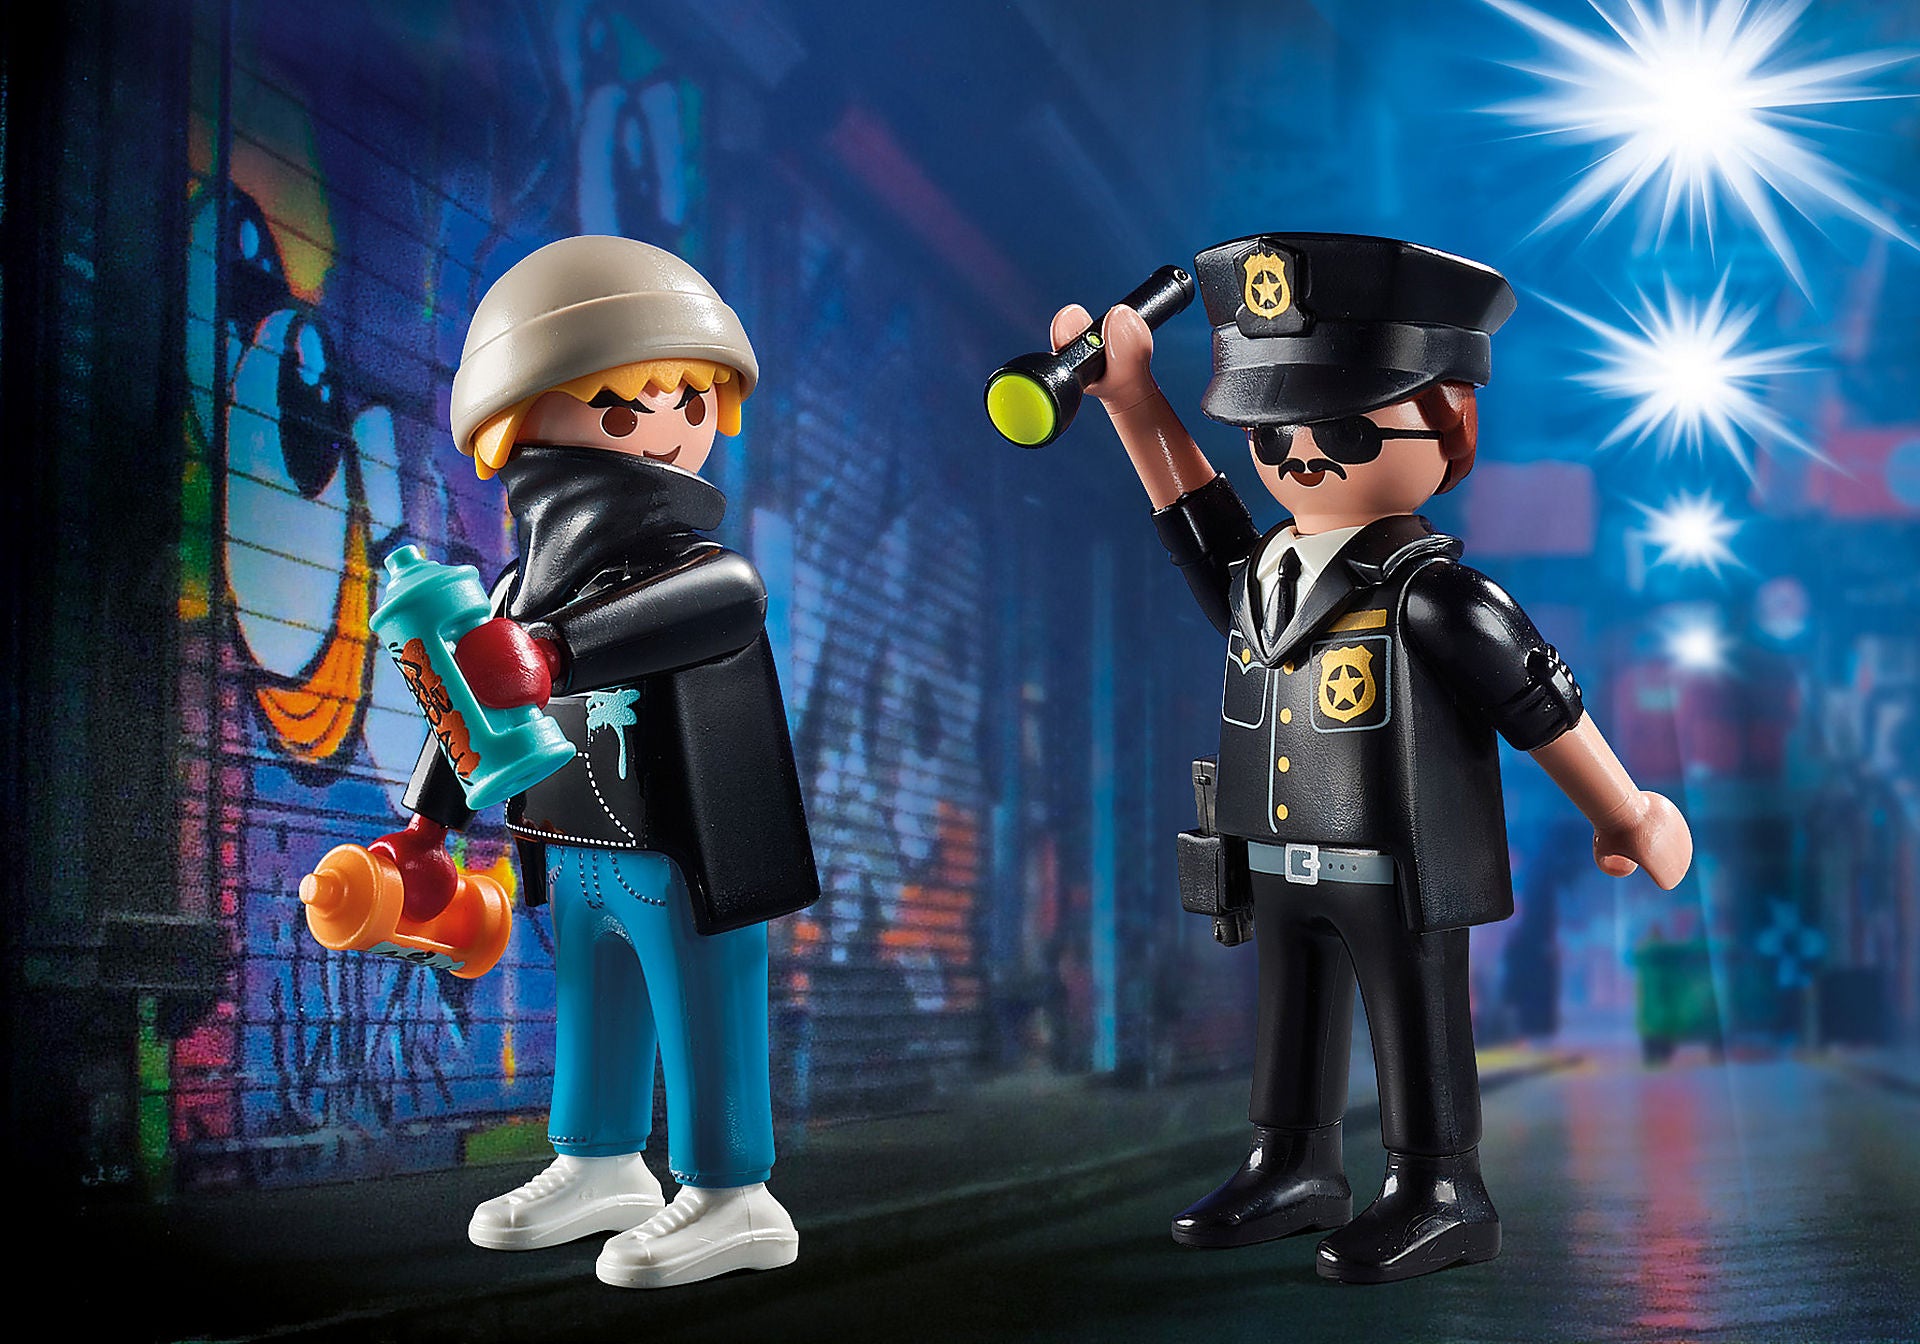 Playmobil DuoPack Policeman and Street Artist